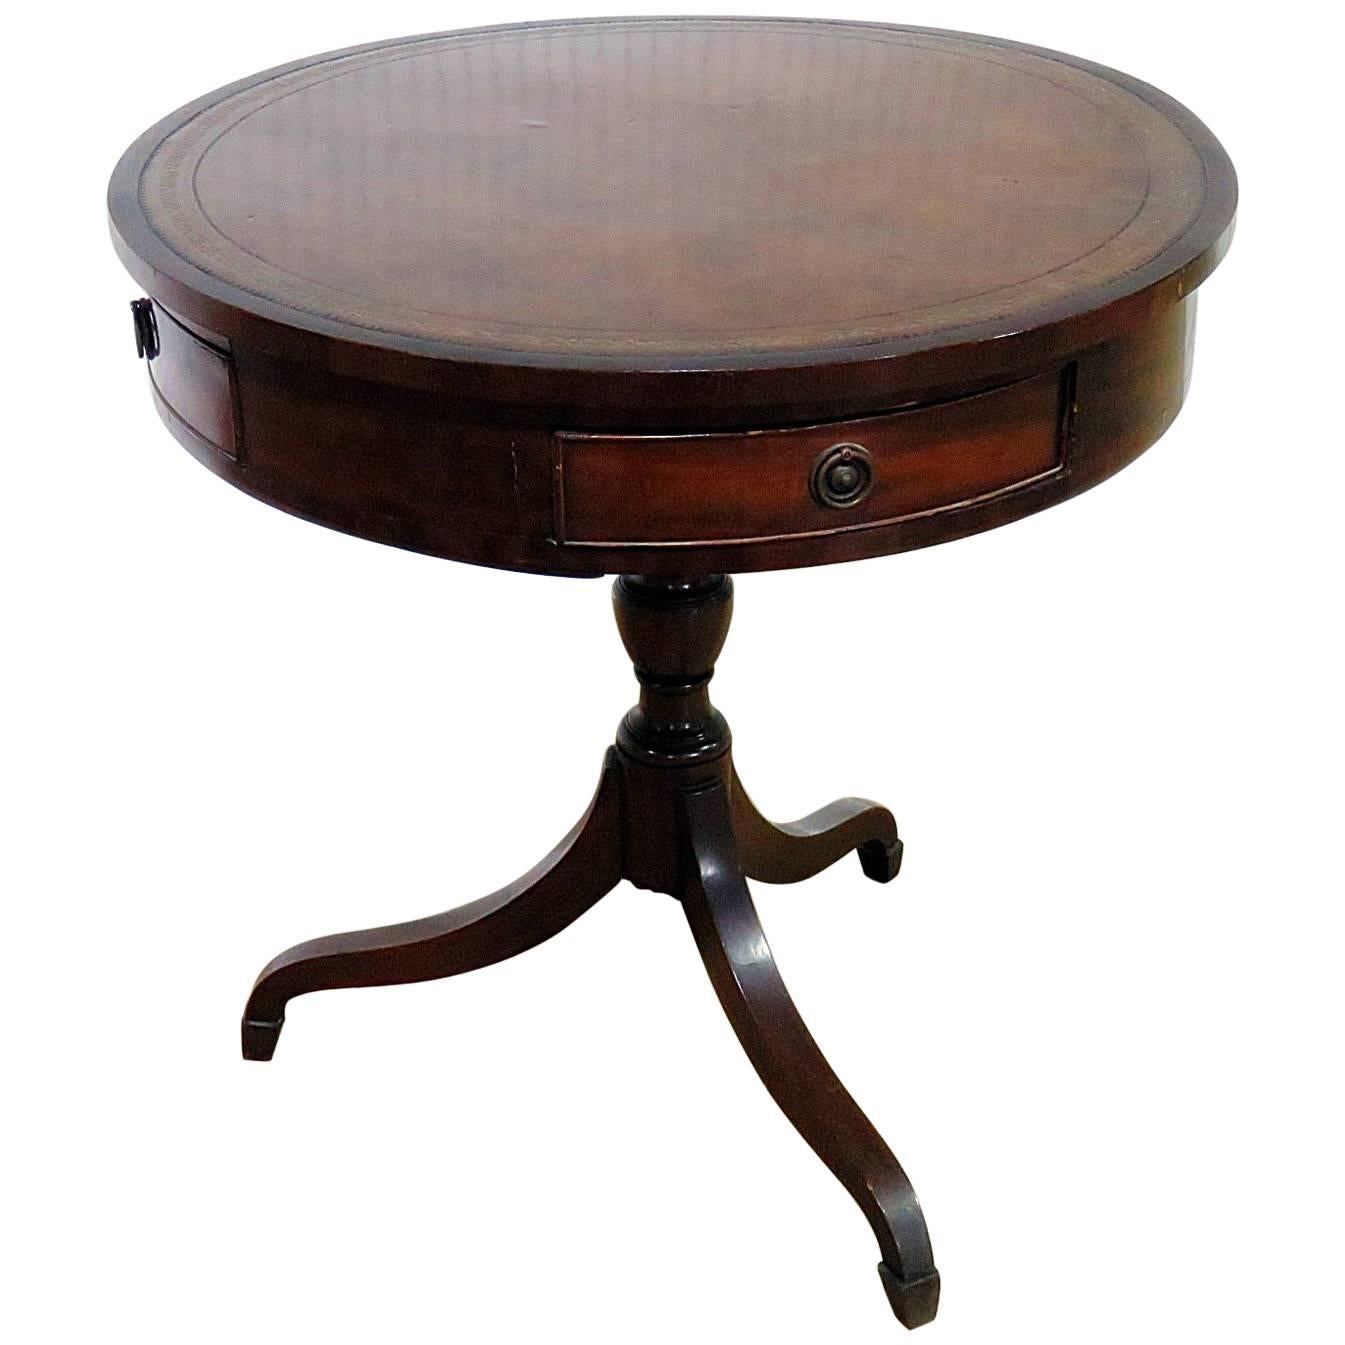 19th Century English Revolving Drum Table